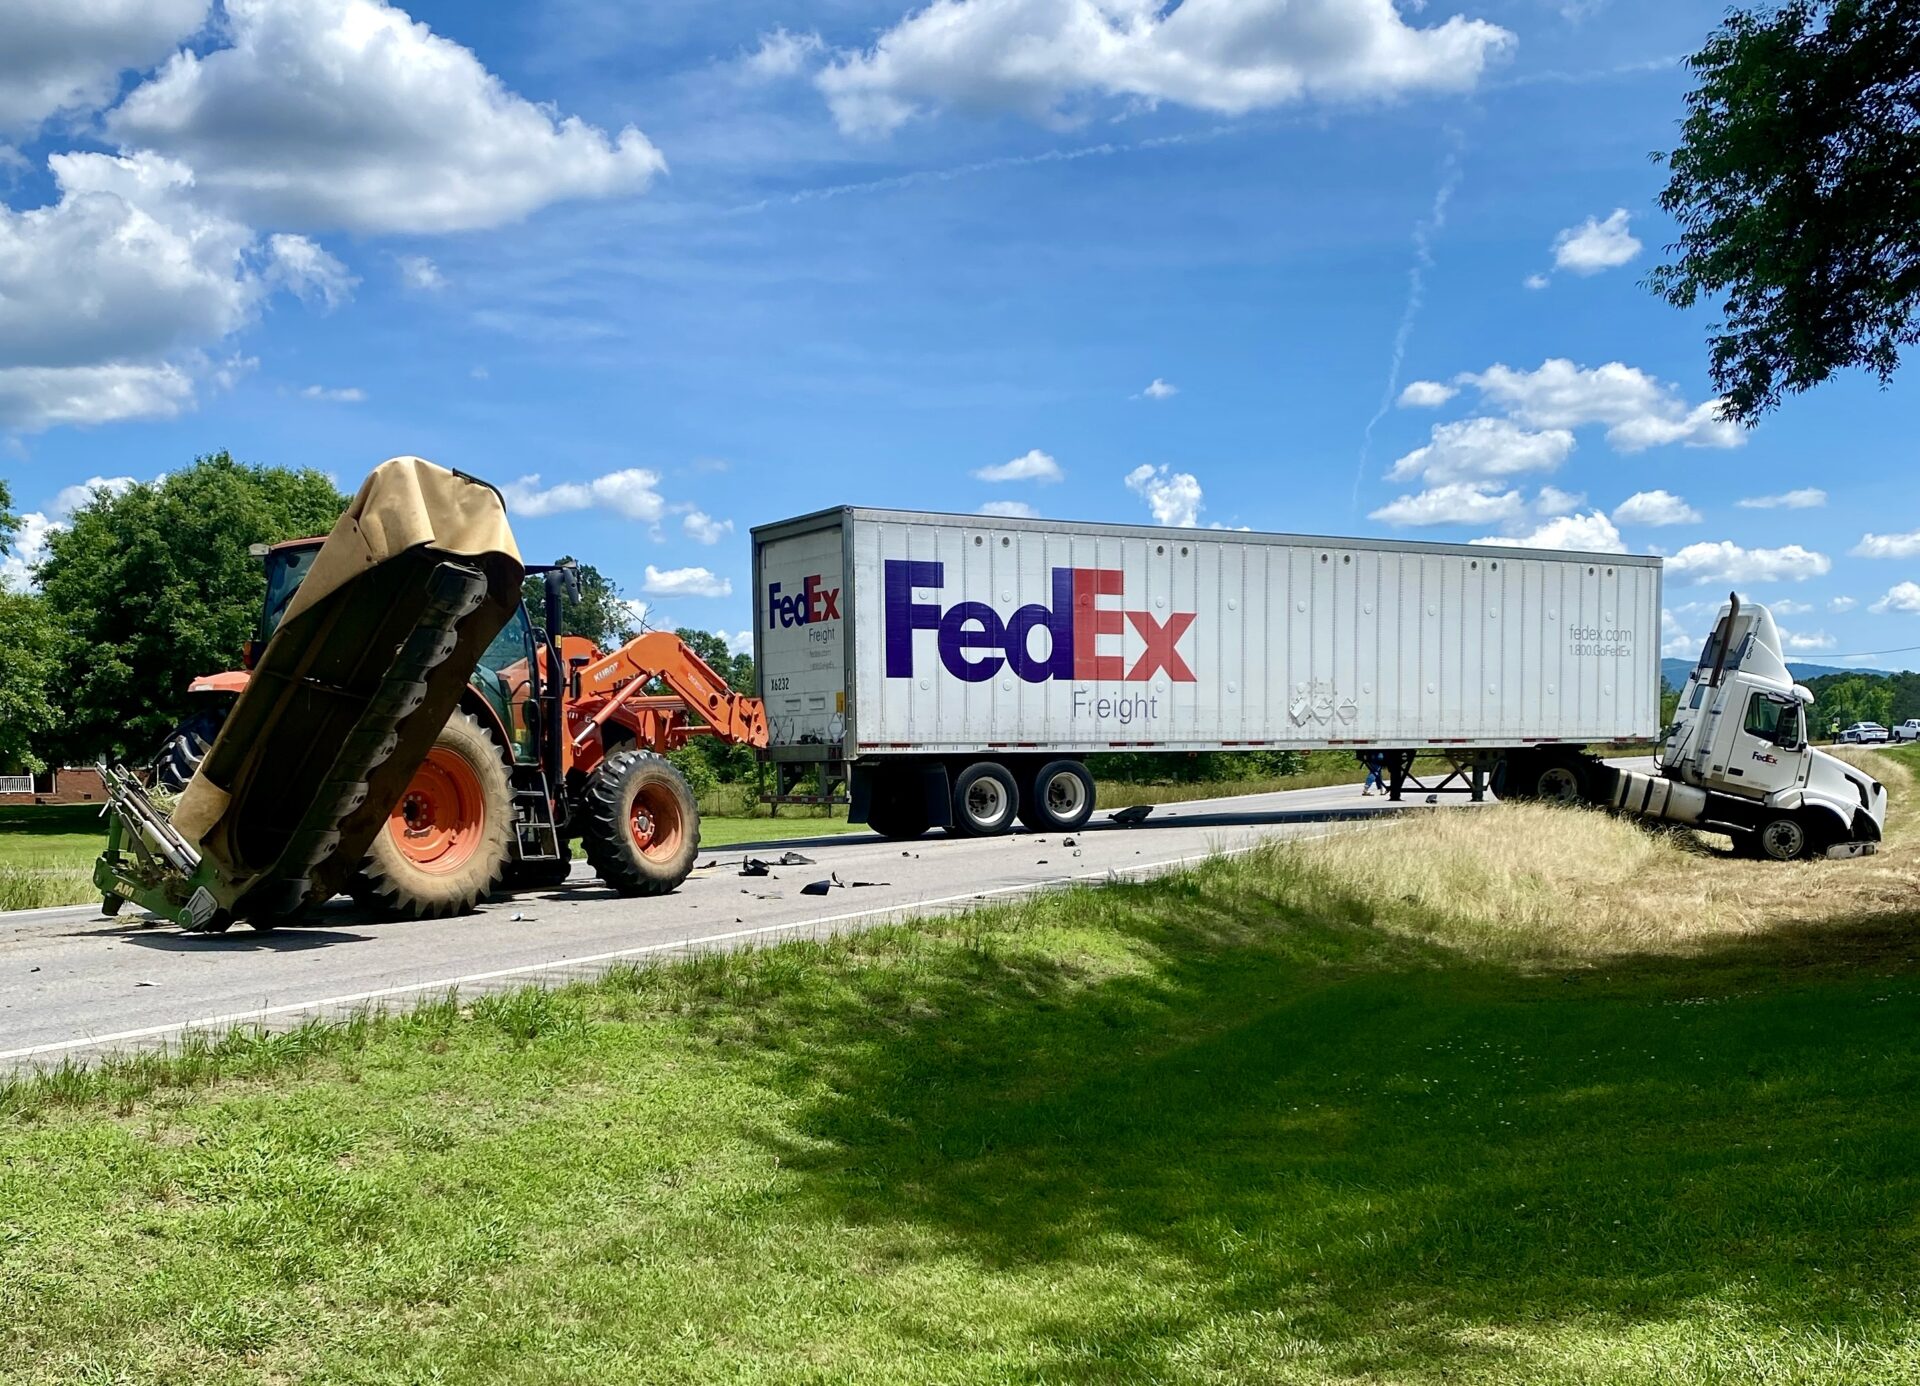 18-Wheeler Versus Farm Tractor Collision Monday Afternoon